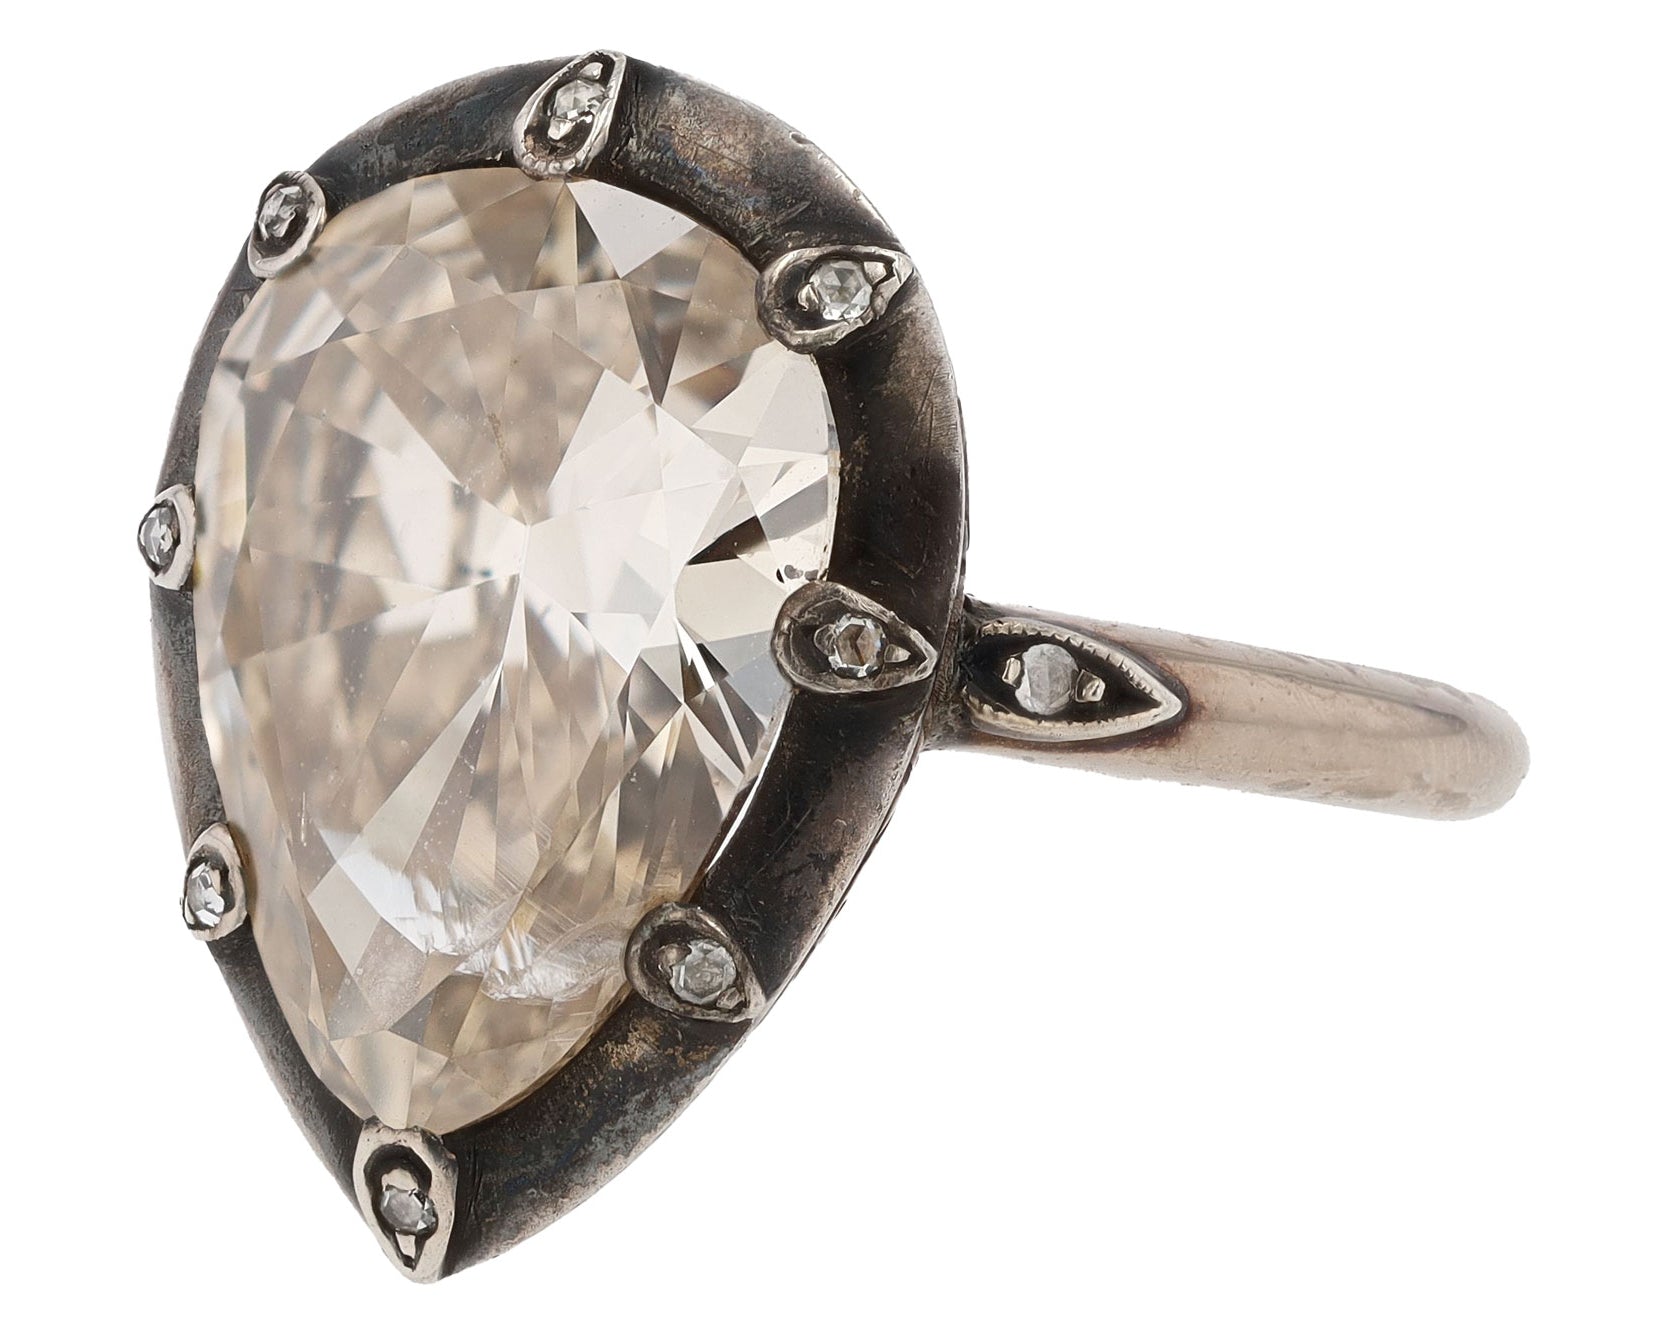 Antique 5.31 Carat Pear Cut Champagne Diamond Ring